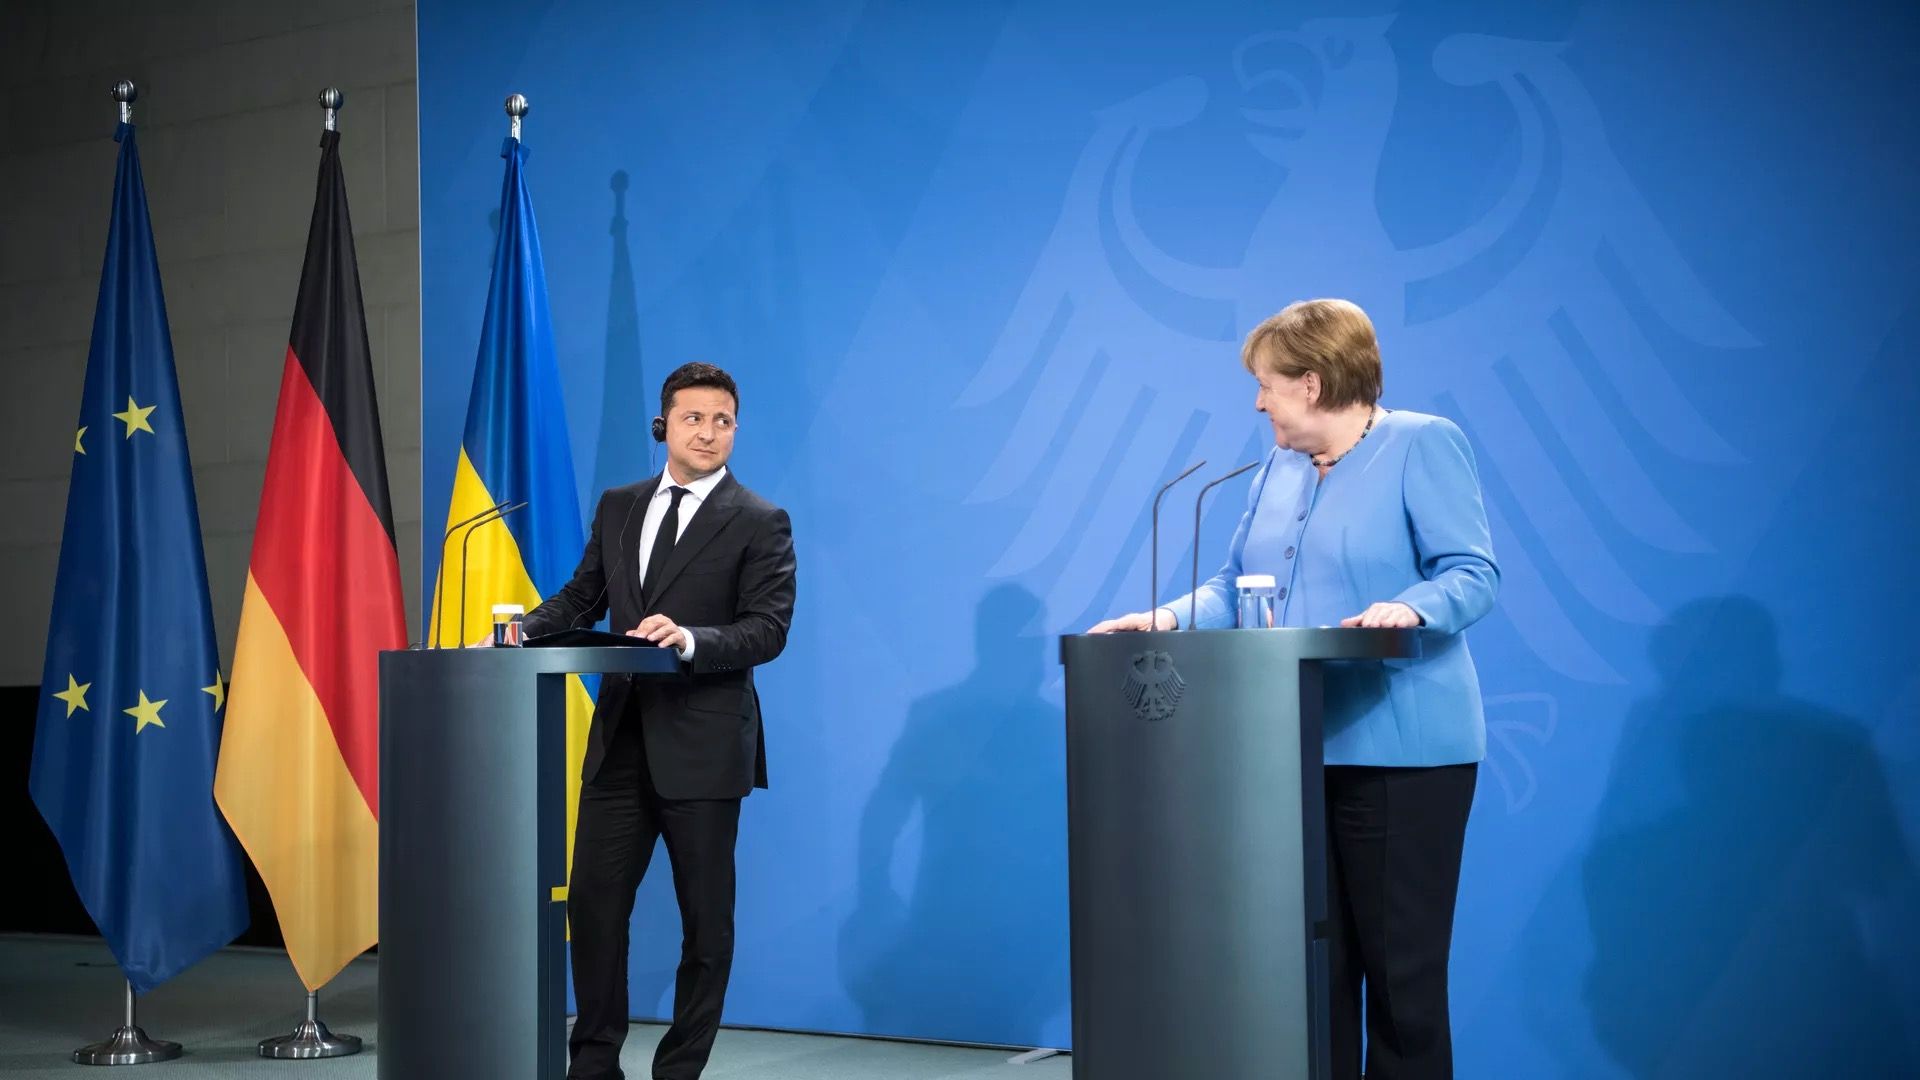 Ukrainian President Volodymyr Zelensky and German Chancellor Angela Merkel are seen during a news conference.